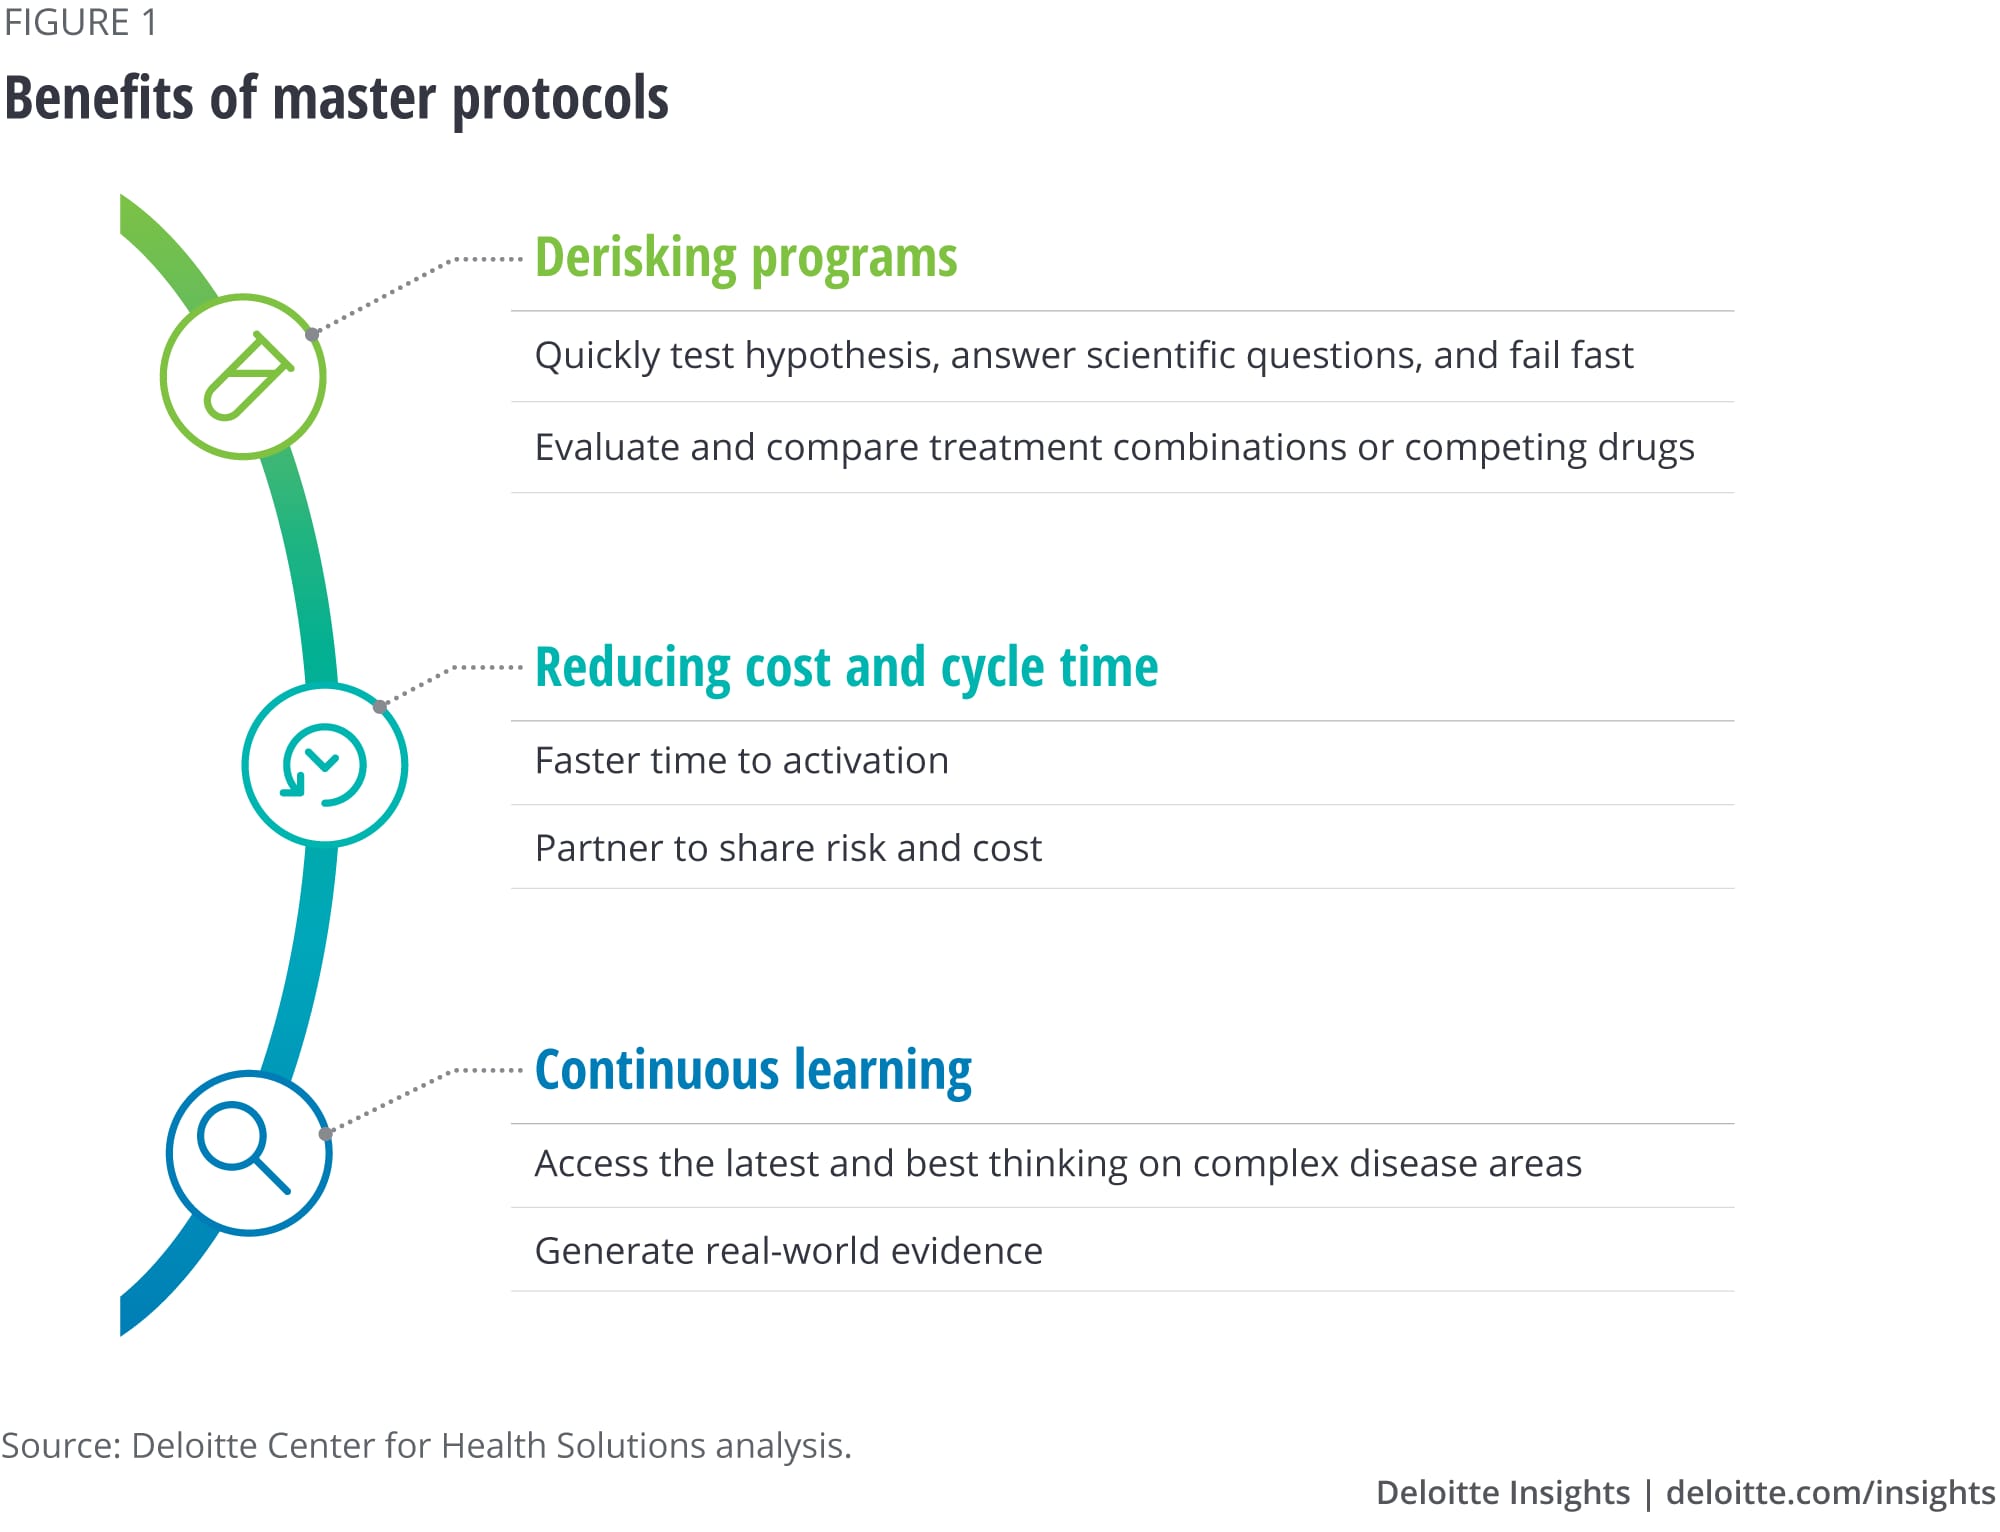 Benefits of master protocols